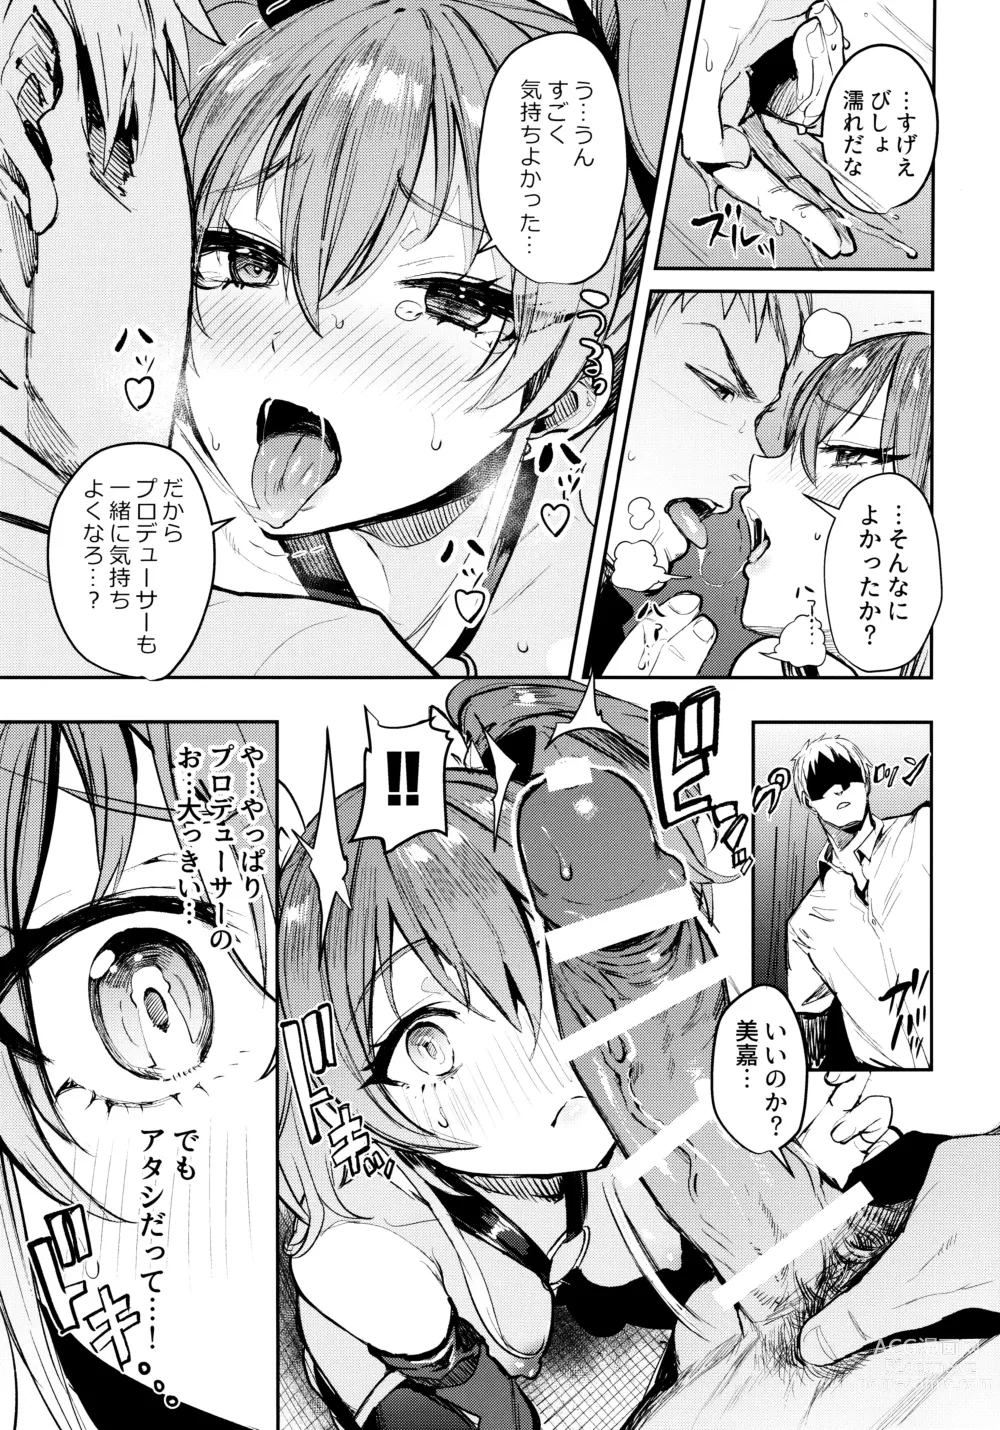 Page 12 of doujinshi Mika to Futari de.